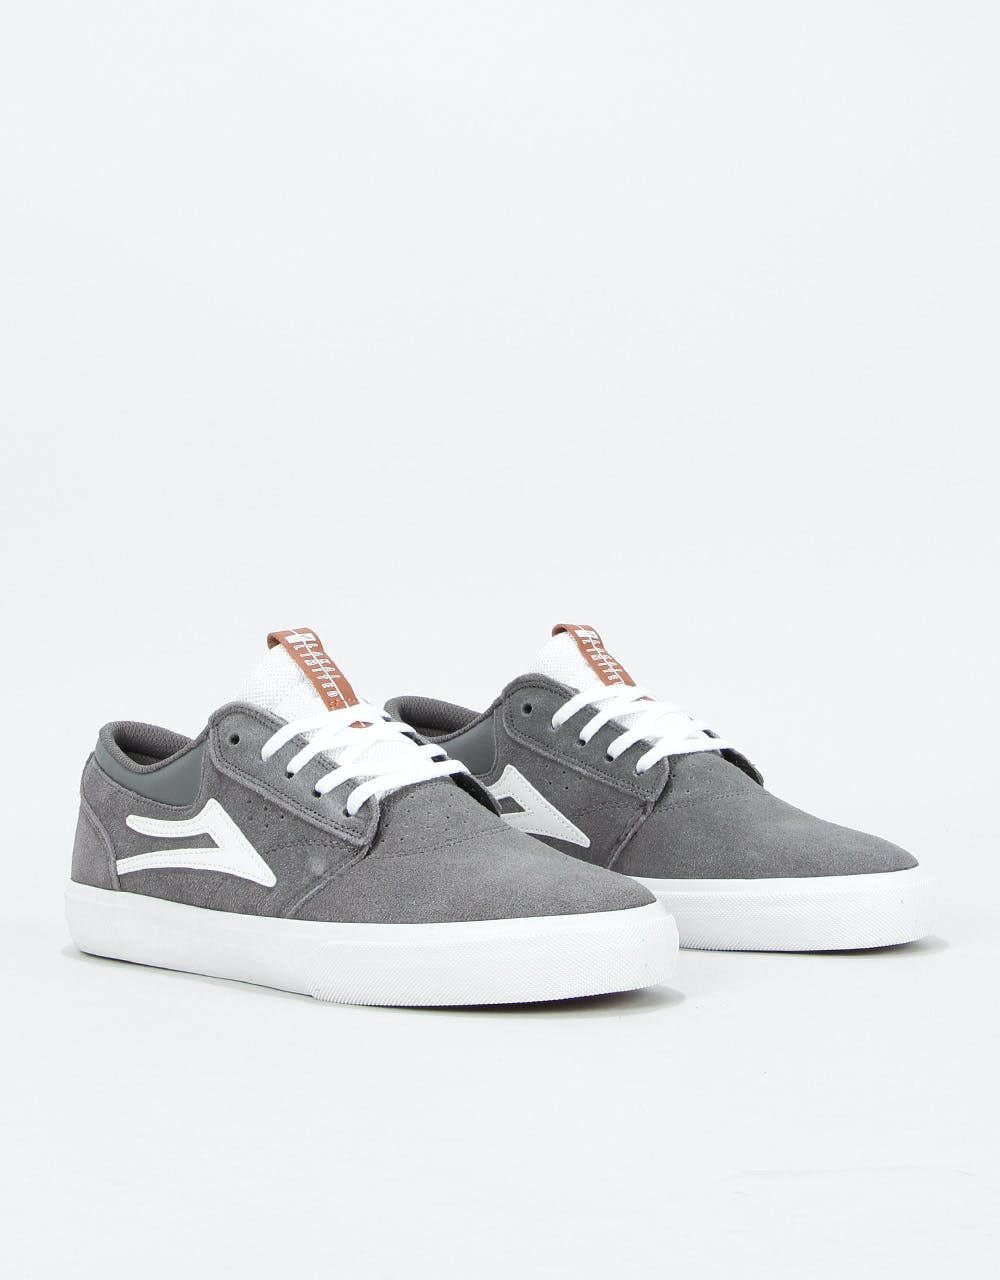 Lakai Griffin Skate Shoes - Grey/White Suede